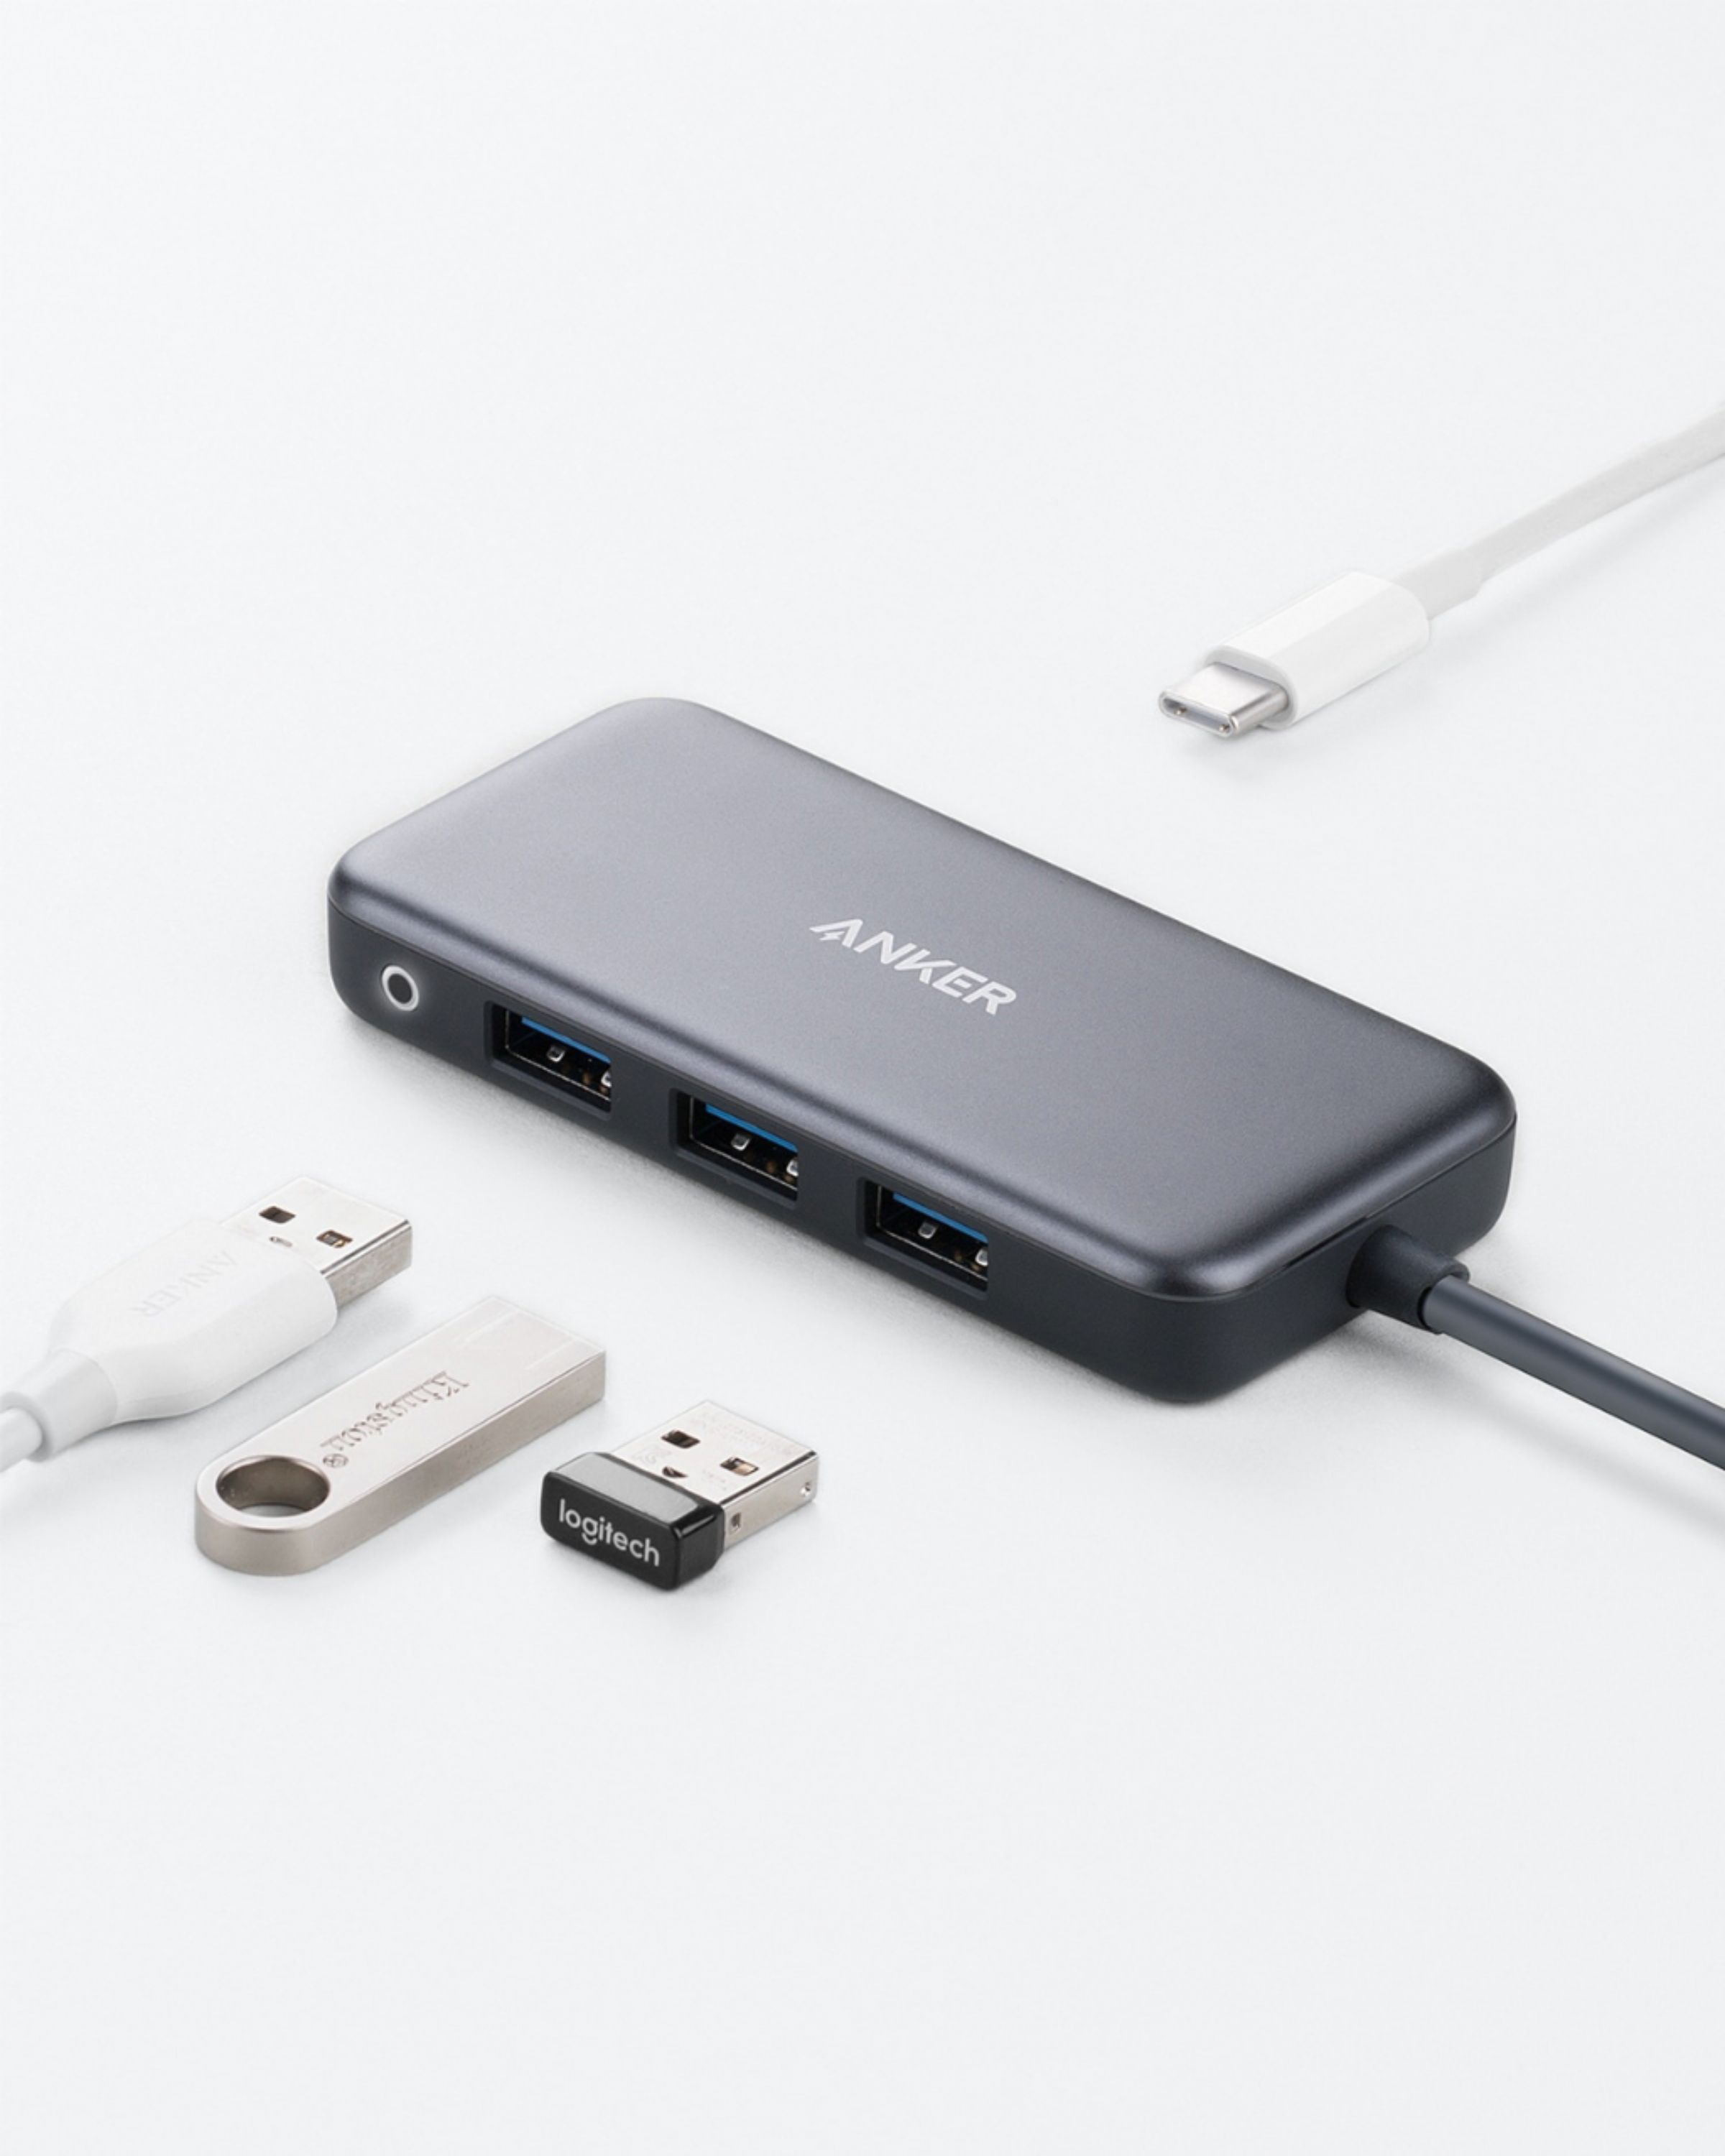 Best Buy: Anker Premium 3-Port USB 3.0 Hub with Gigabit Ethernet